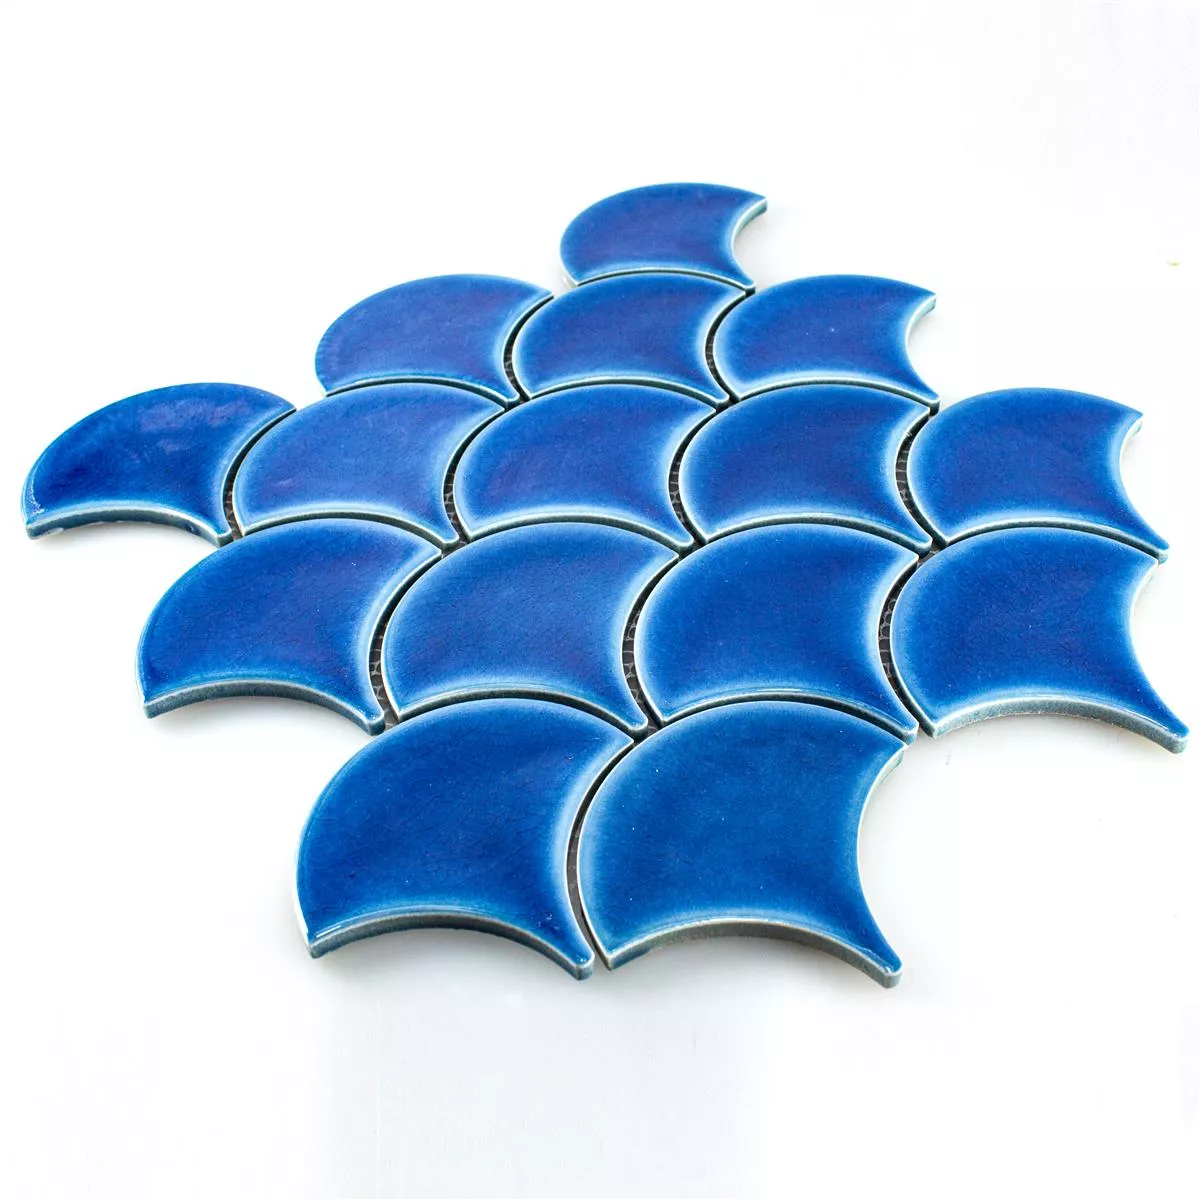 Sample Ceramic Mosaic Tiles Newark Blue